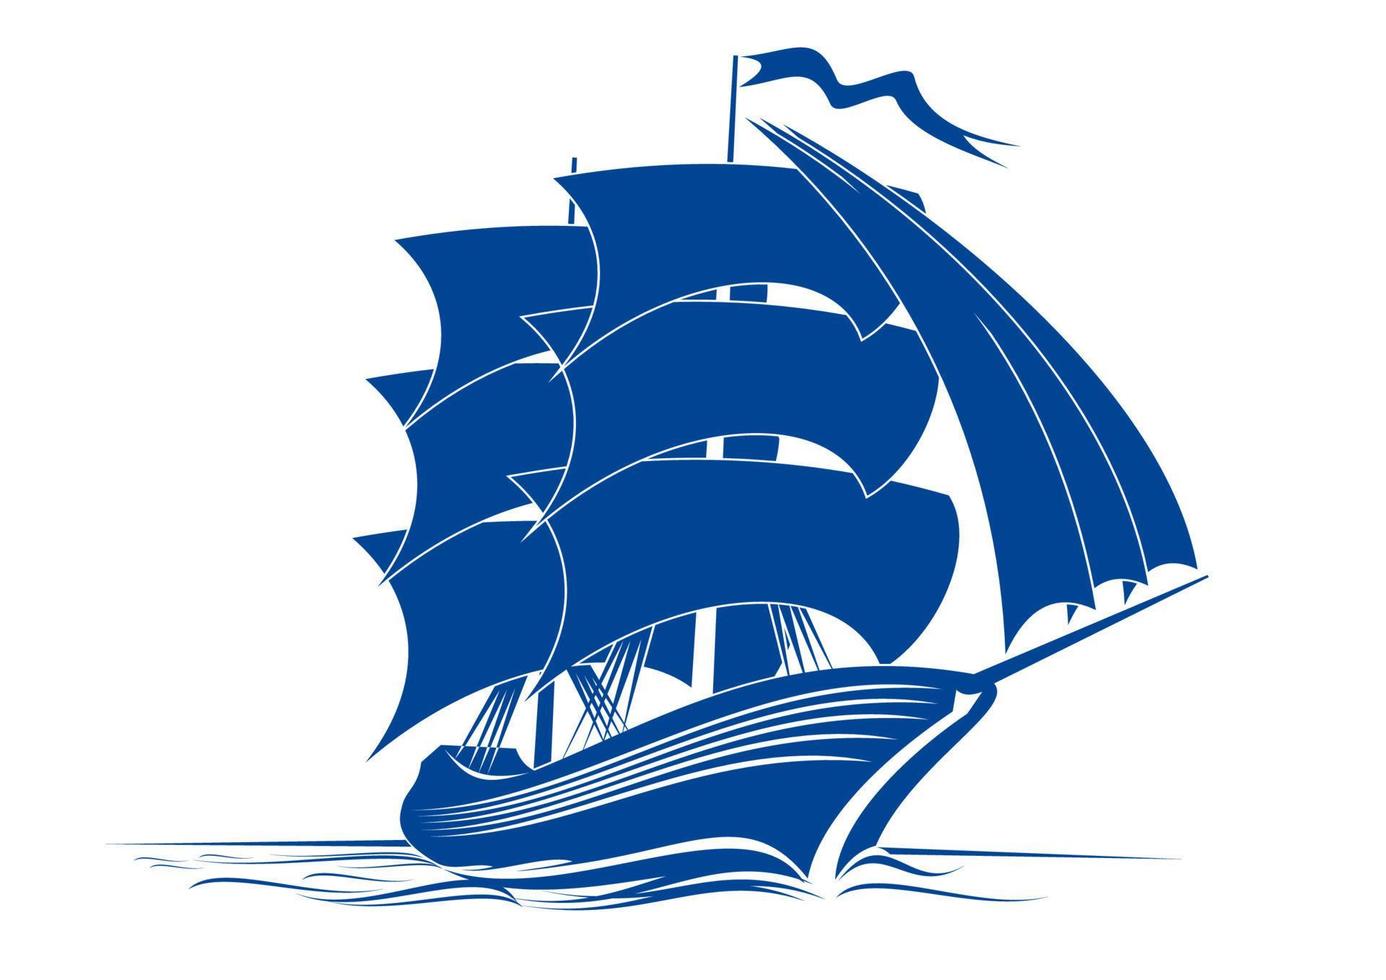 Brigantine sail ship silhouette vector